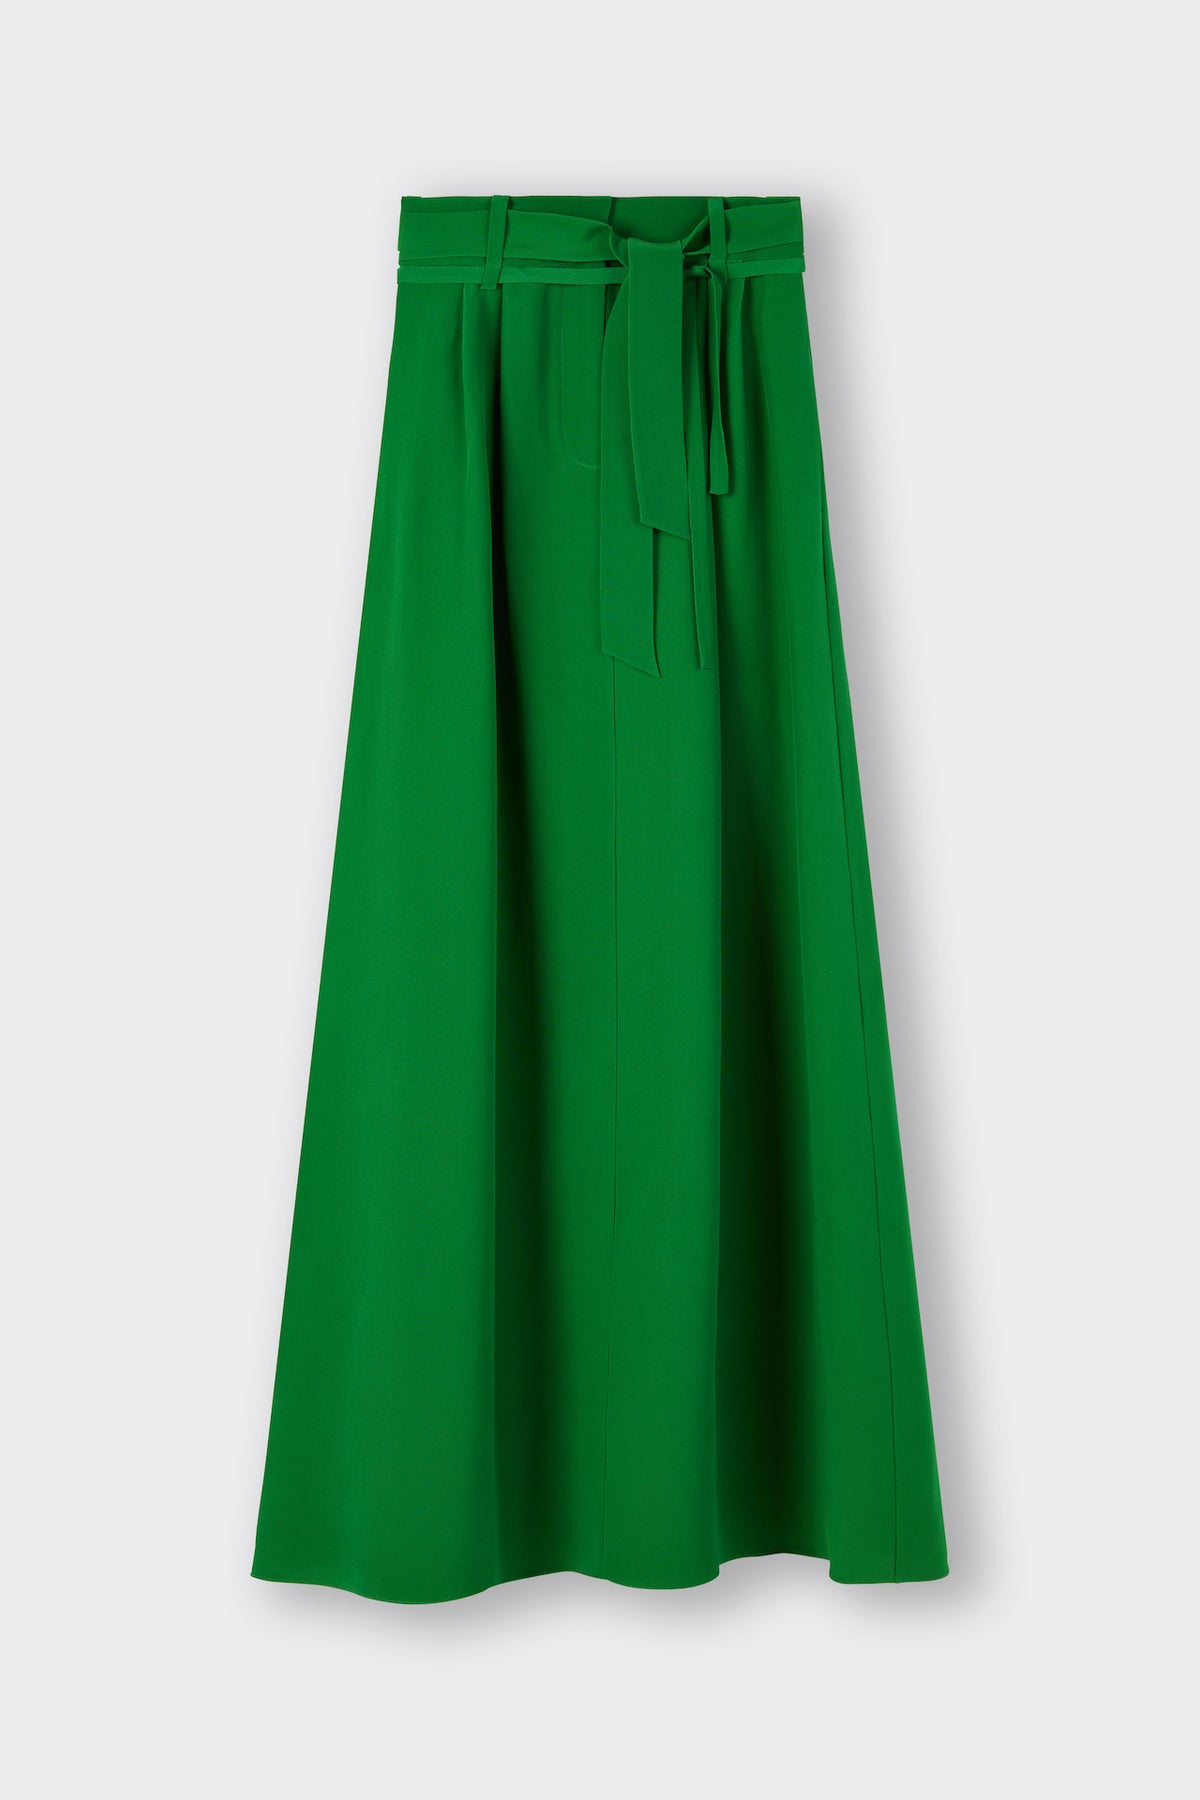 Warwick Skirt in Palm Green| Noon by Noor